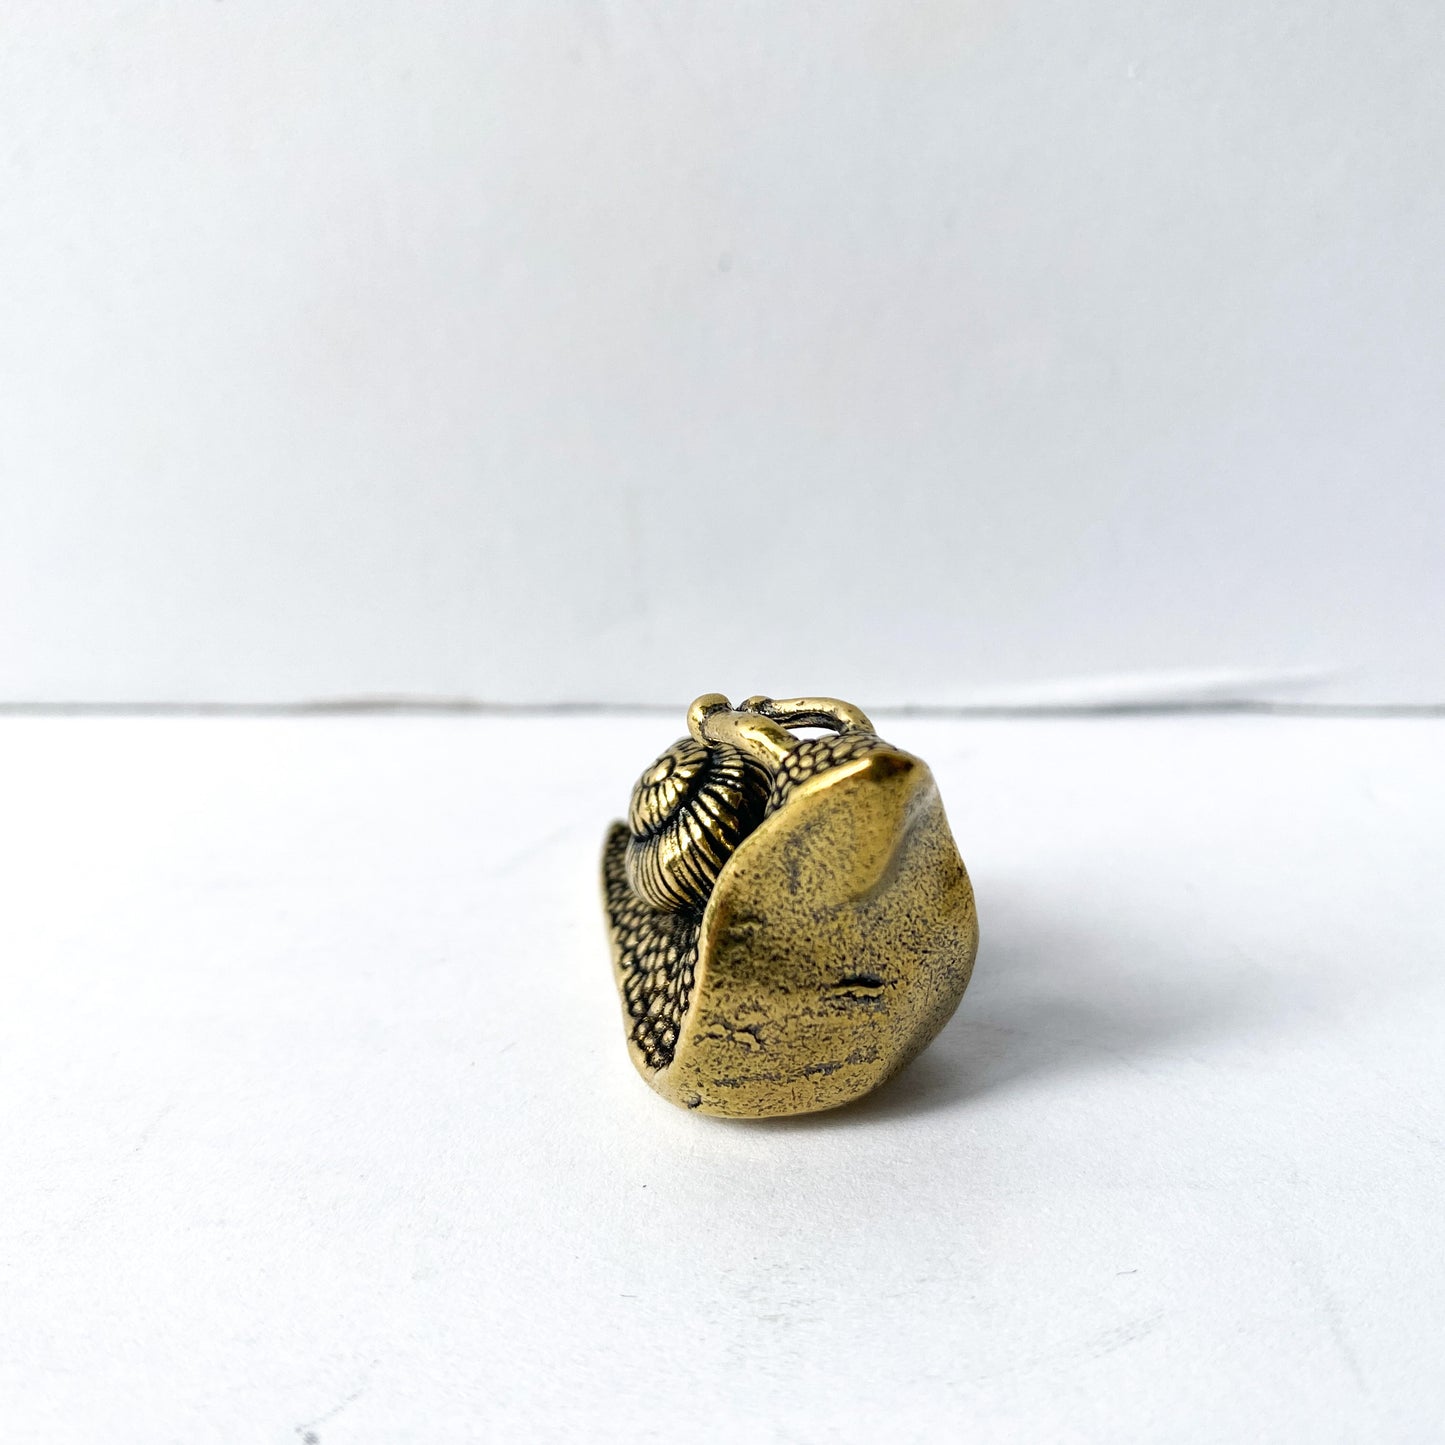 Miniature brass snail figurine